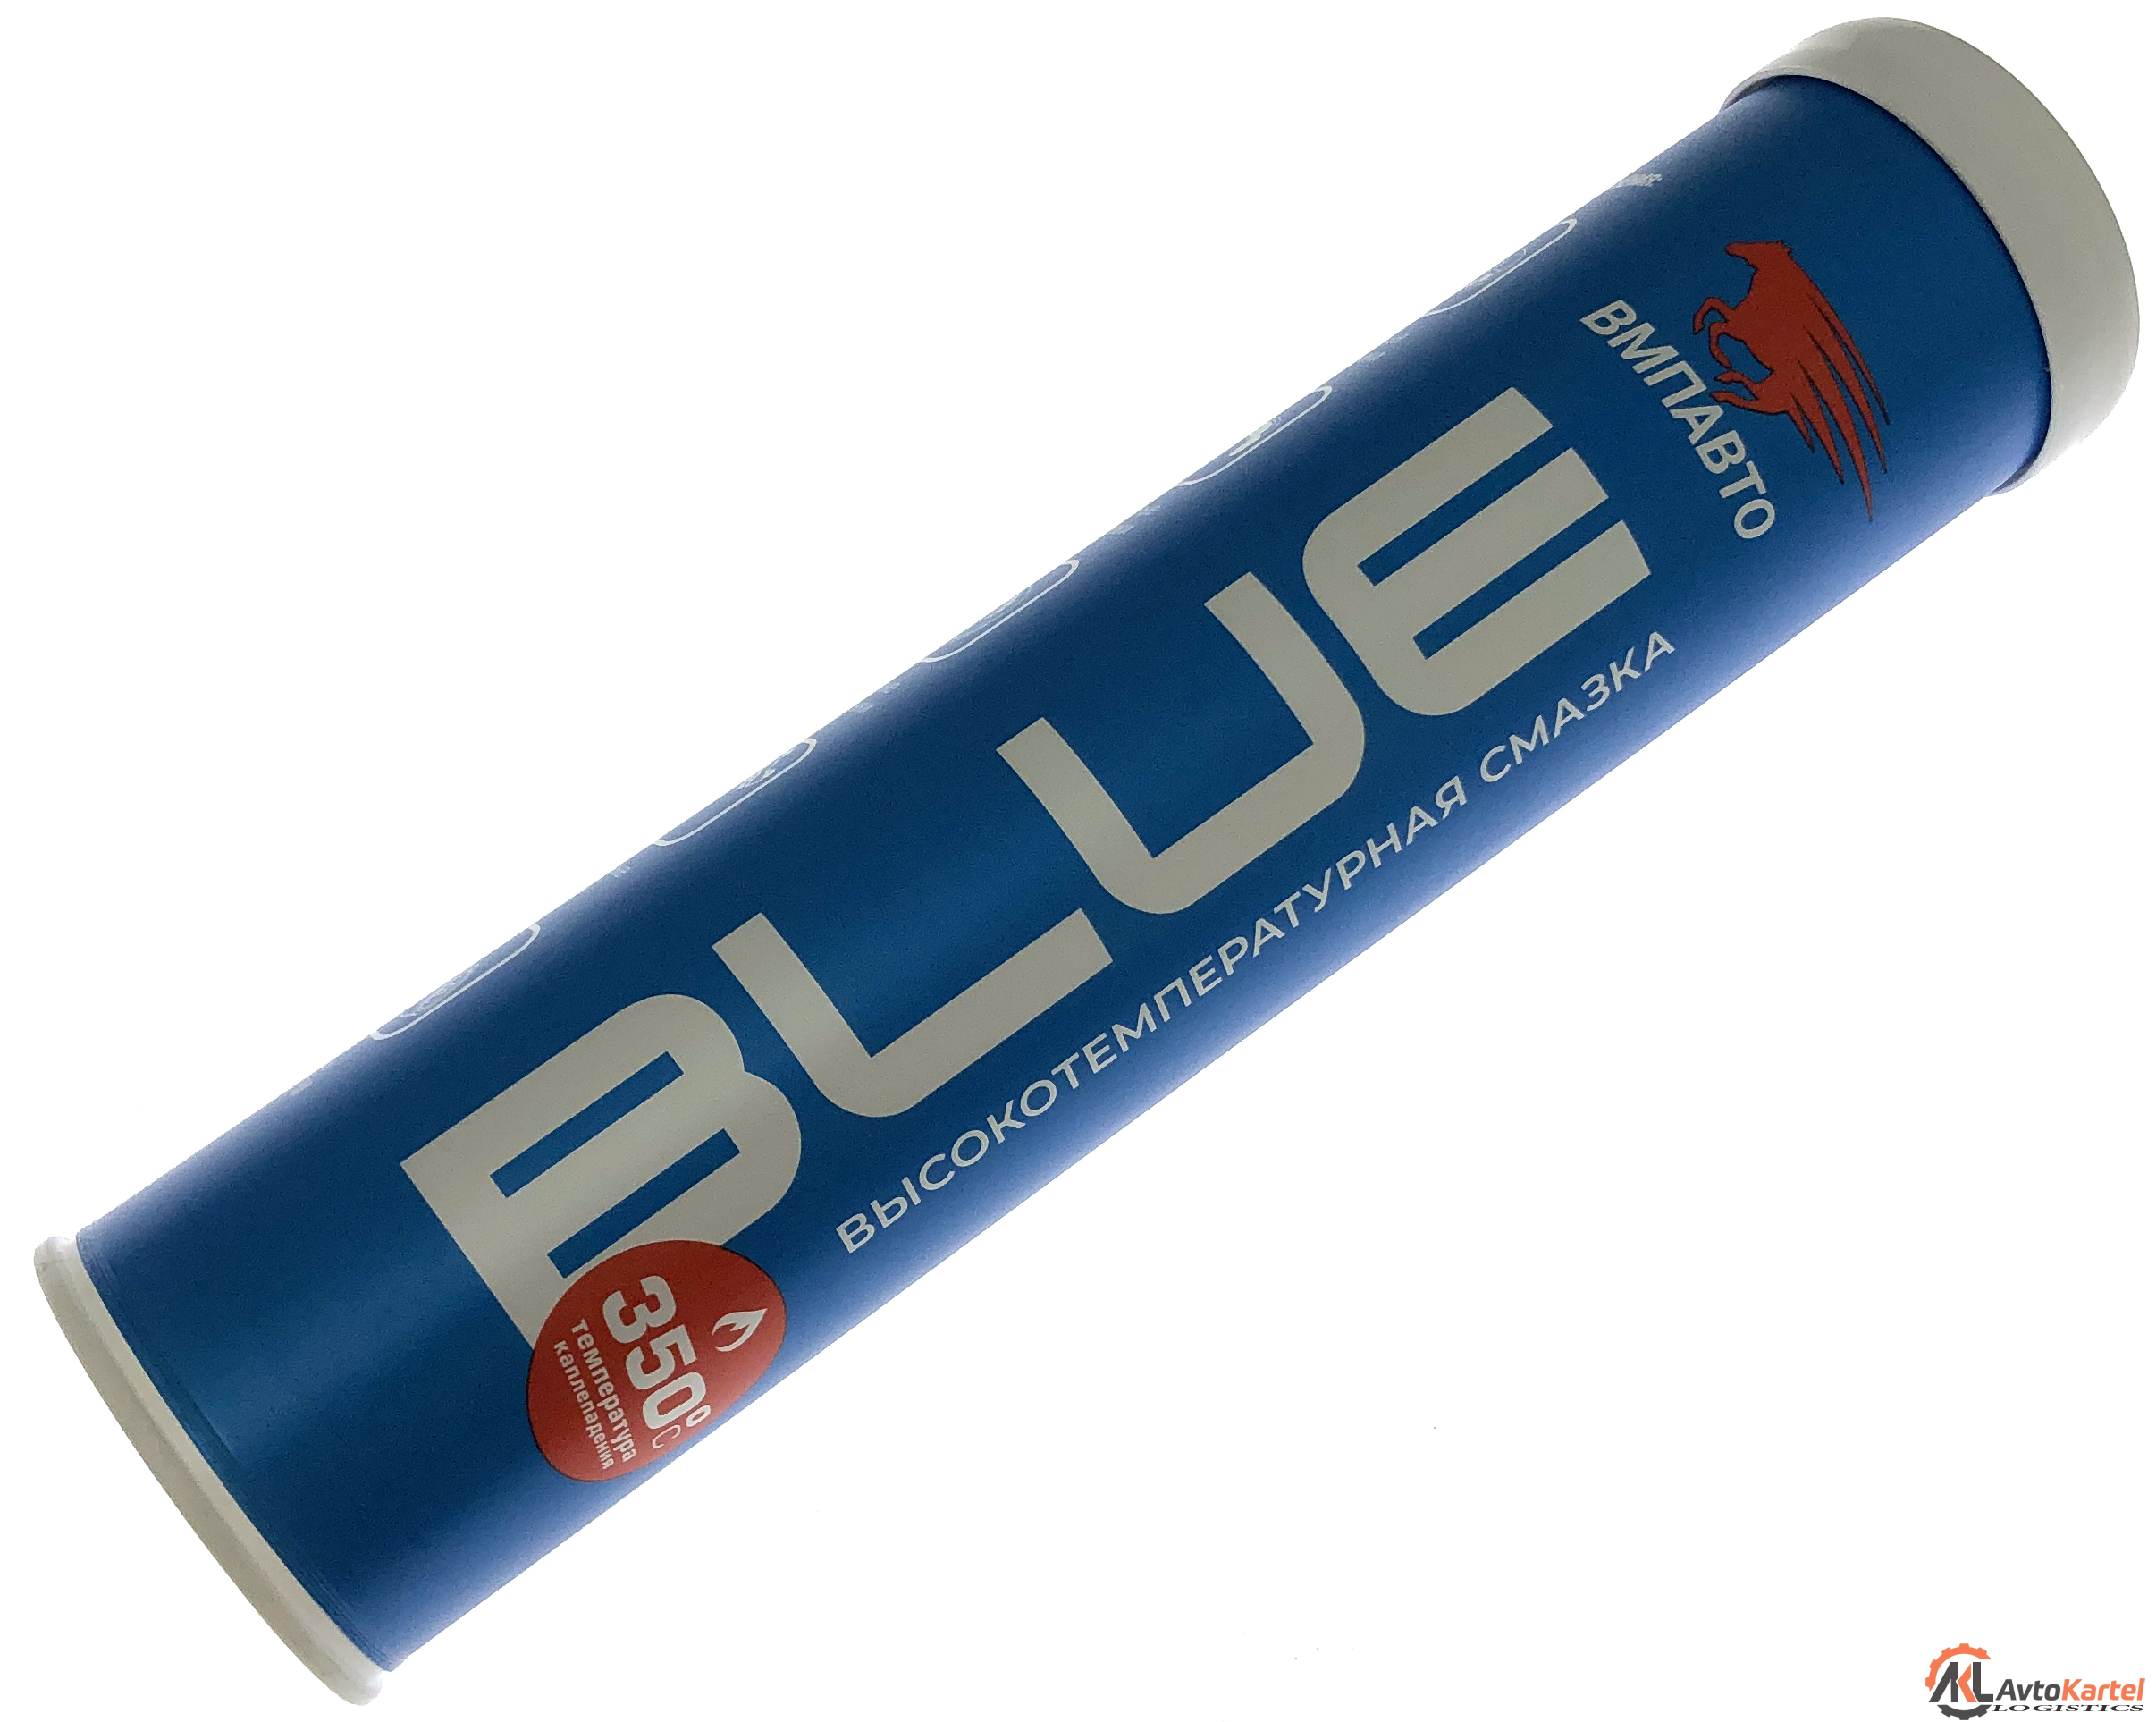 Смазка литиевая высокотемпературная МС-1510 blue 420мл